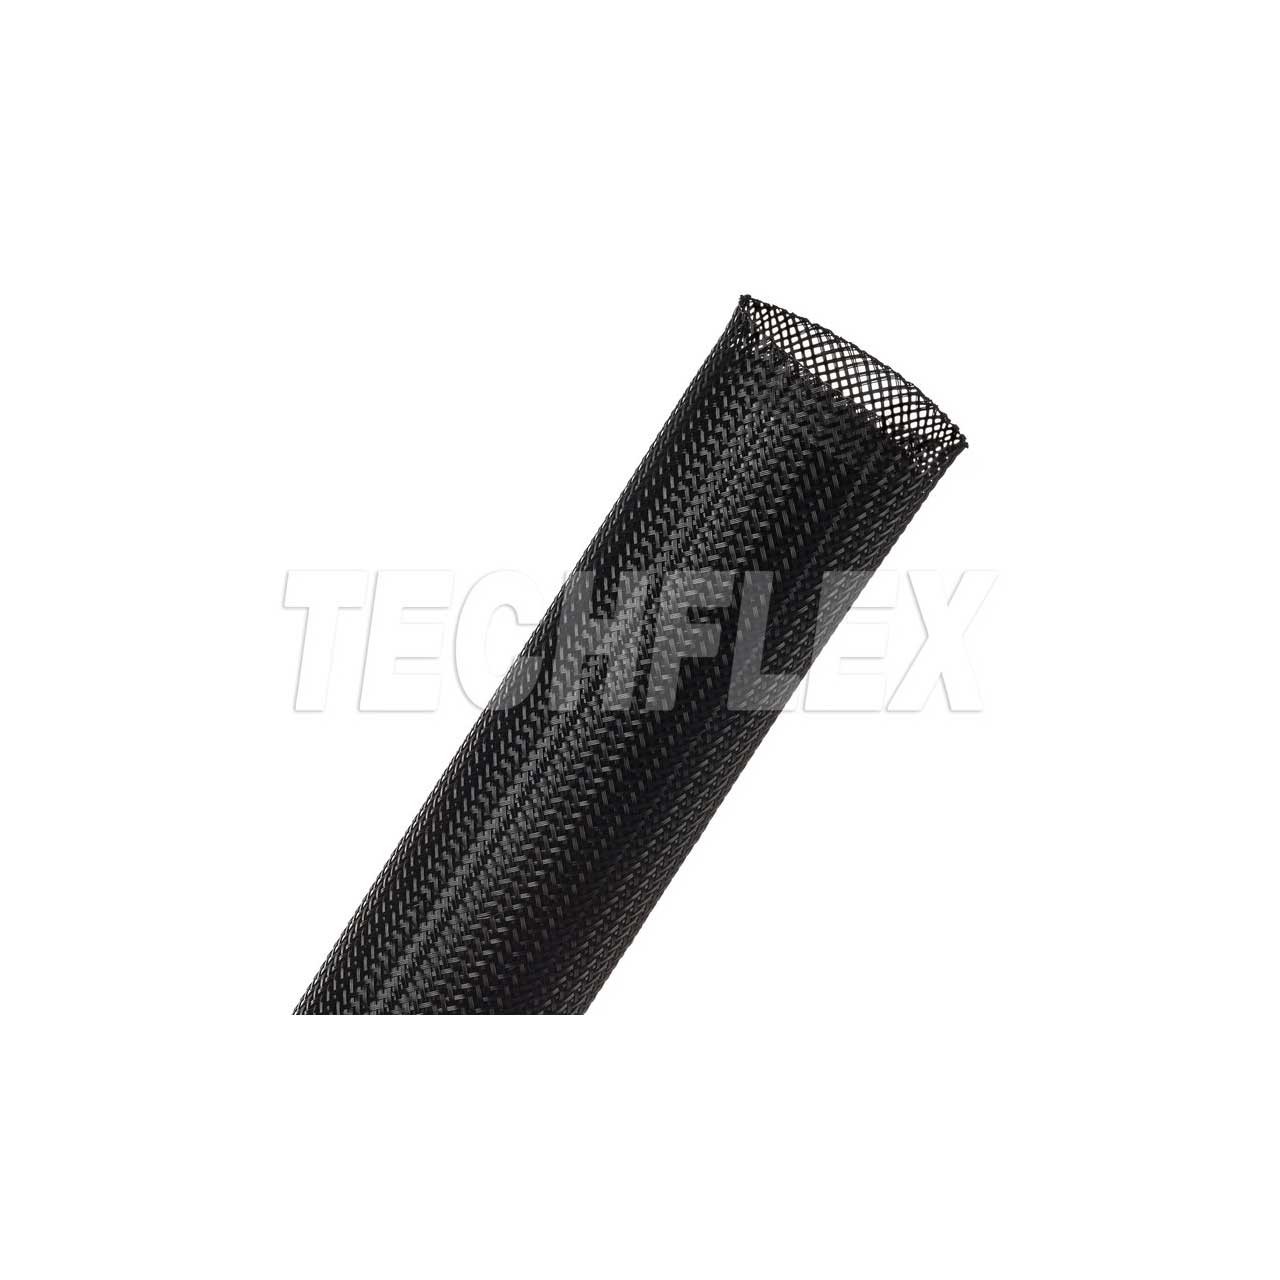 Techflex CCP1.25BK250 1.25 Inch Tubing - Black - 250 Foot